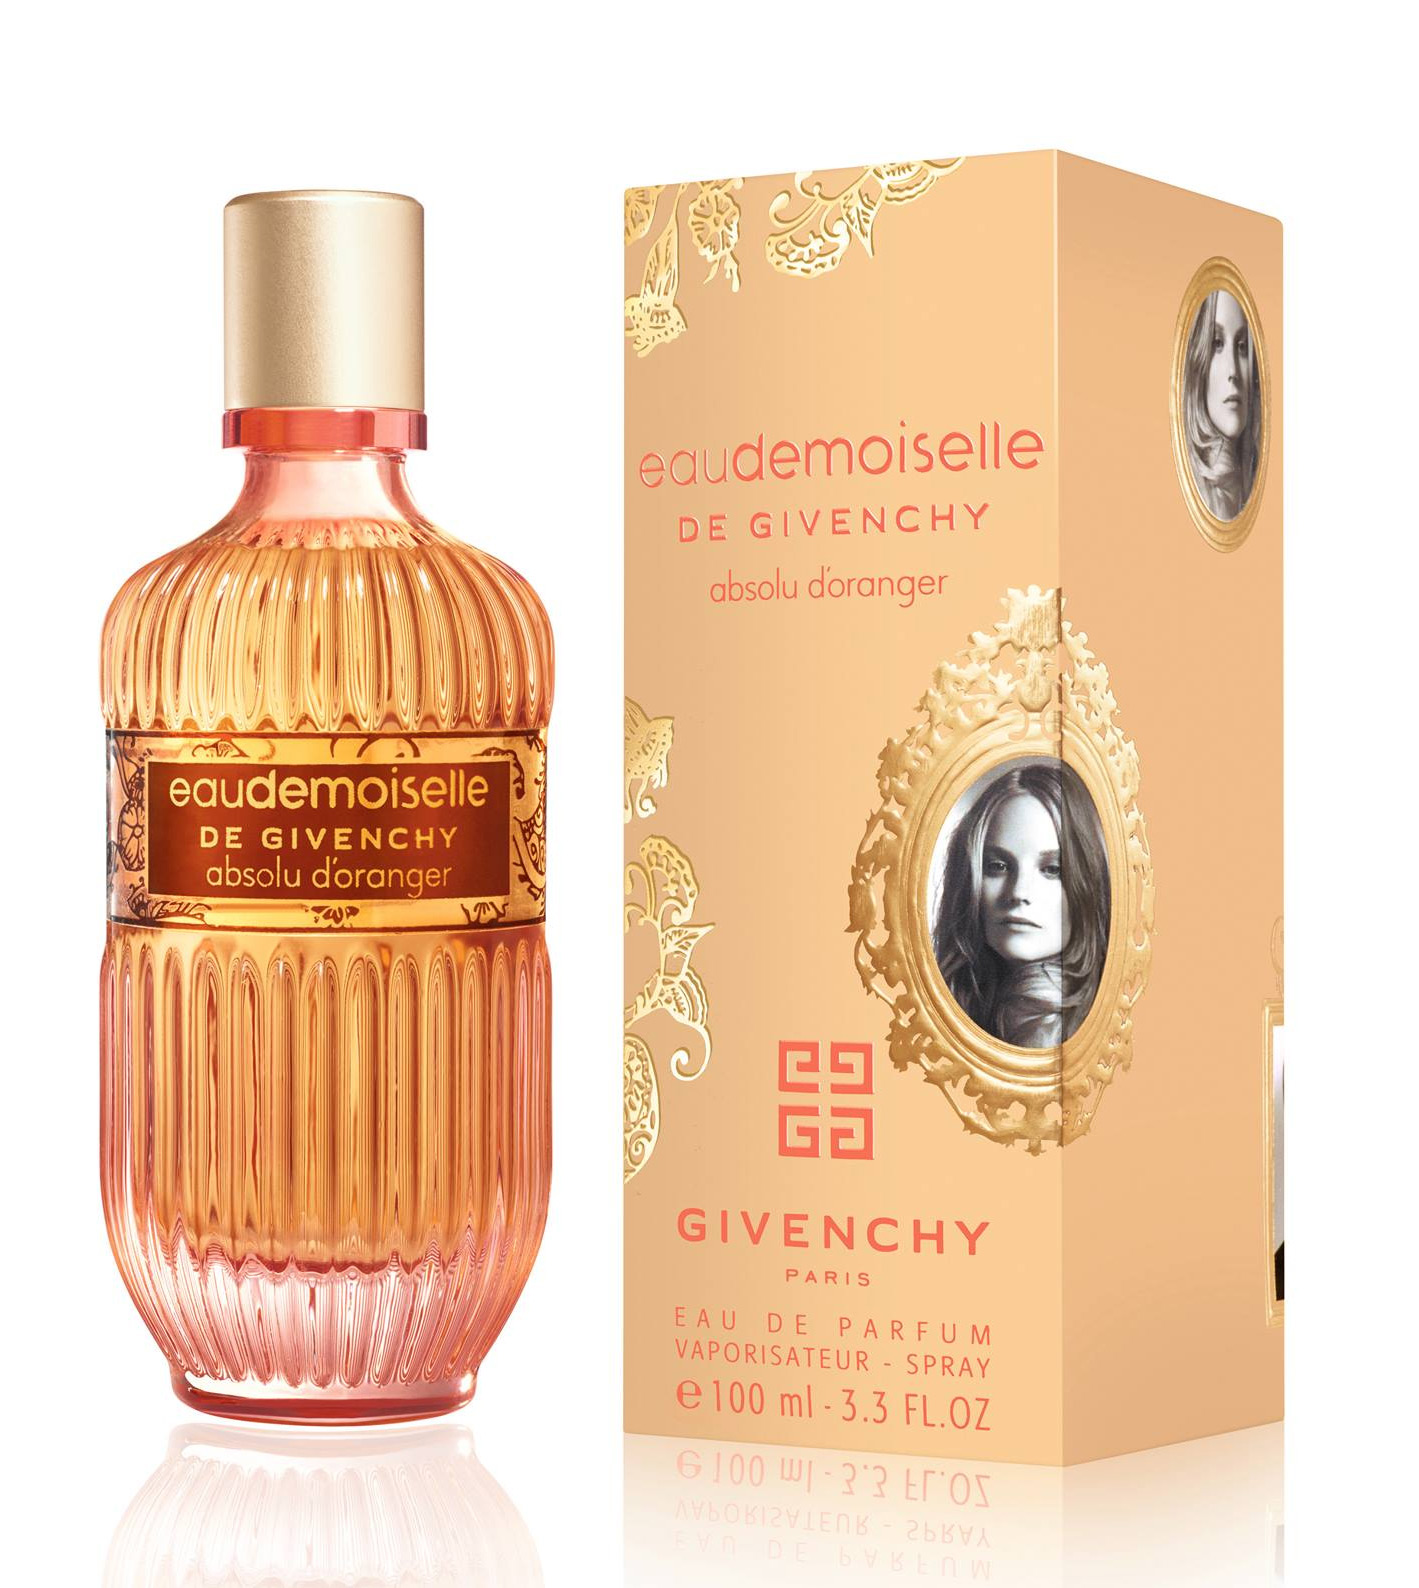 Eaudemoiselle de Givenchy Absolu d’Oranger Givenchy perfume - a new